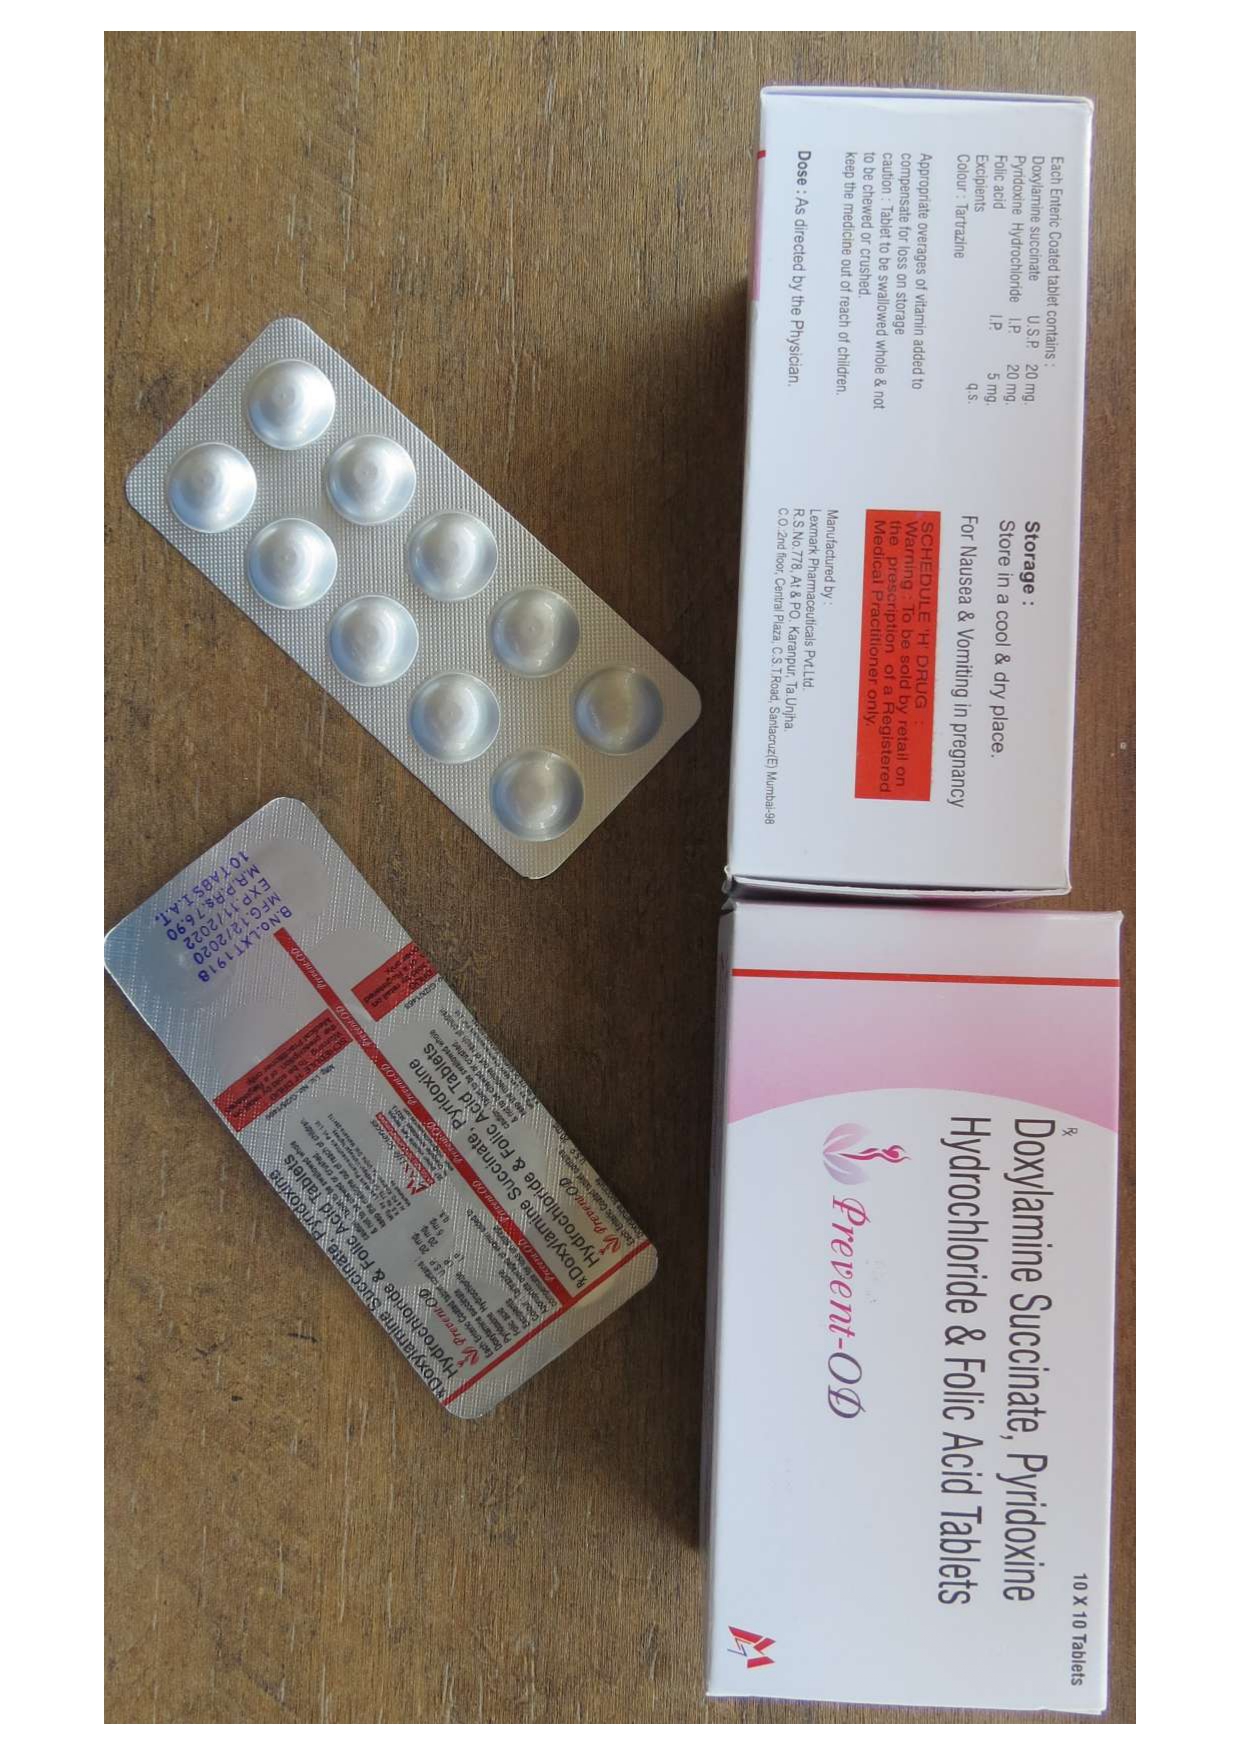 doxylamine succinate 20mg + pyridoxine hcl 20mg + folic acid 5mg tablets